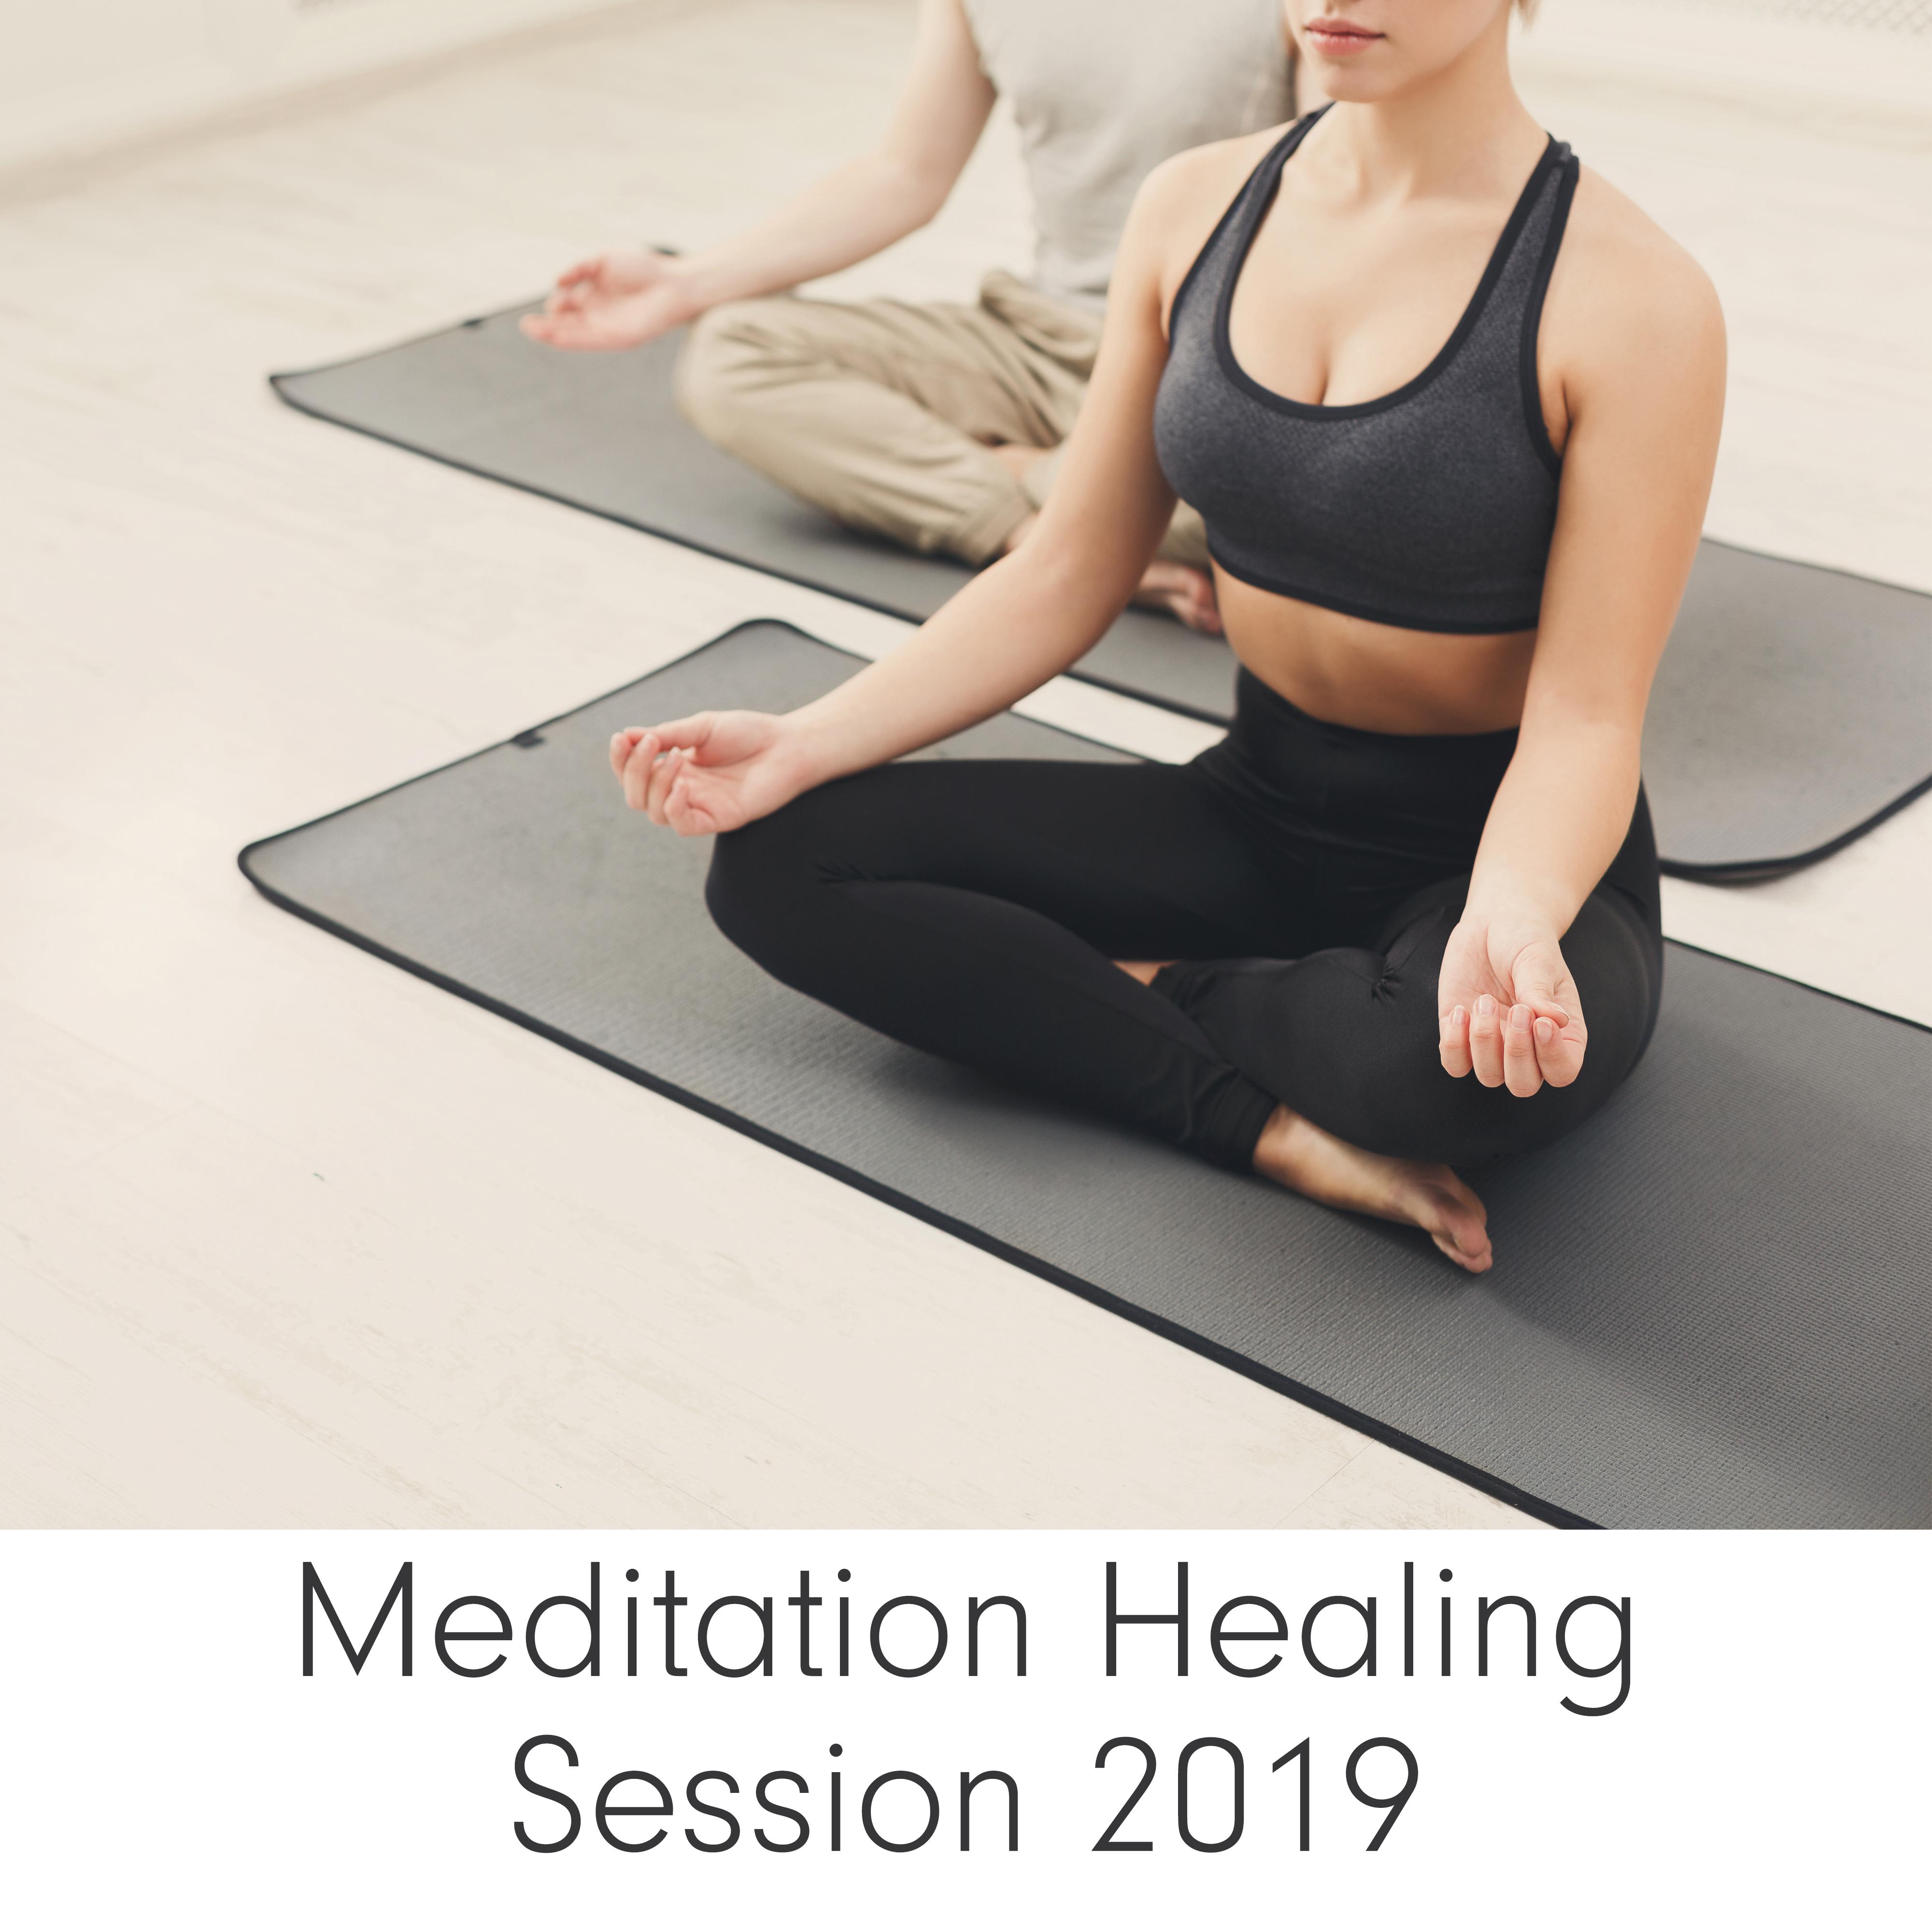 Meditation Healing Session 2019